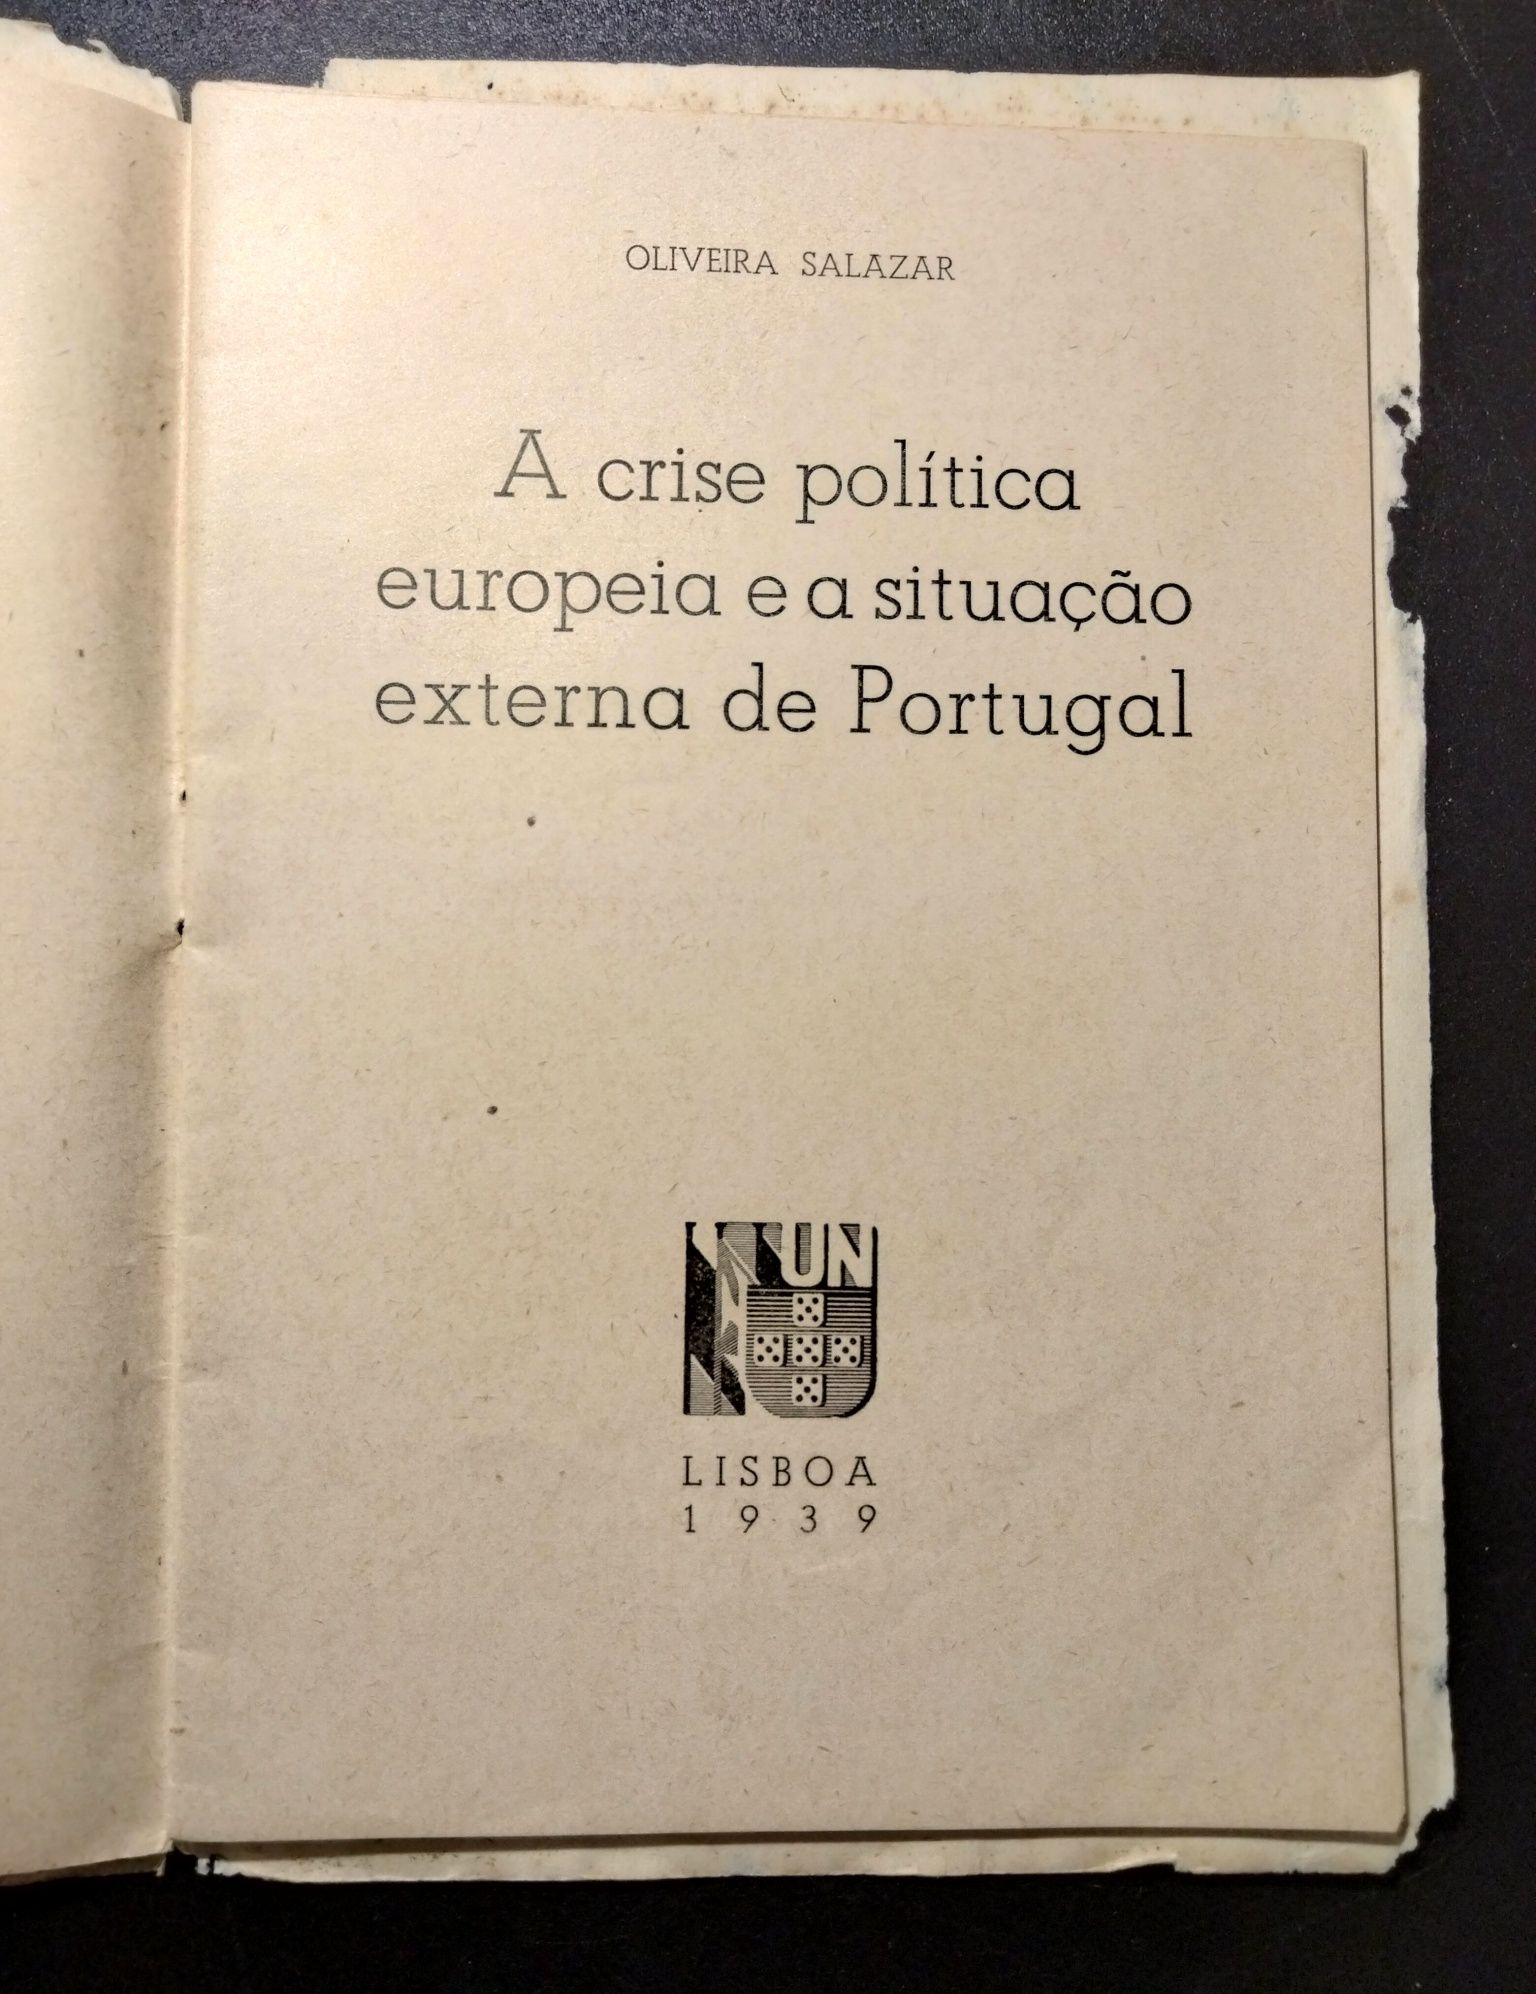 Livro muito raro - Discurso de António Oliveira Salazar (1939)